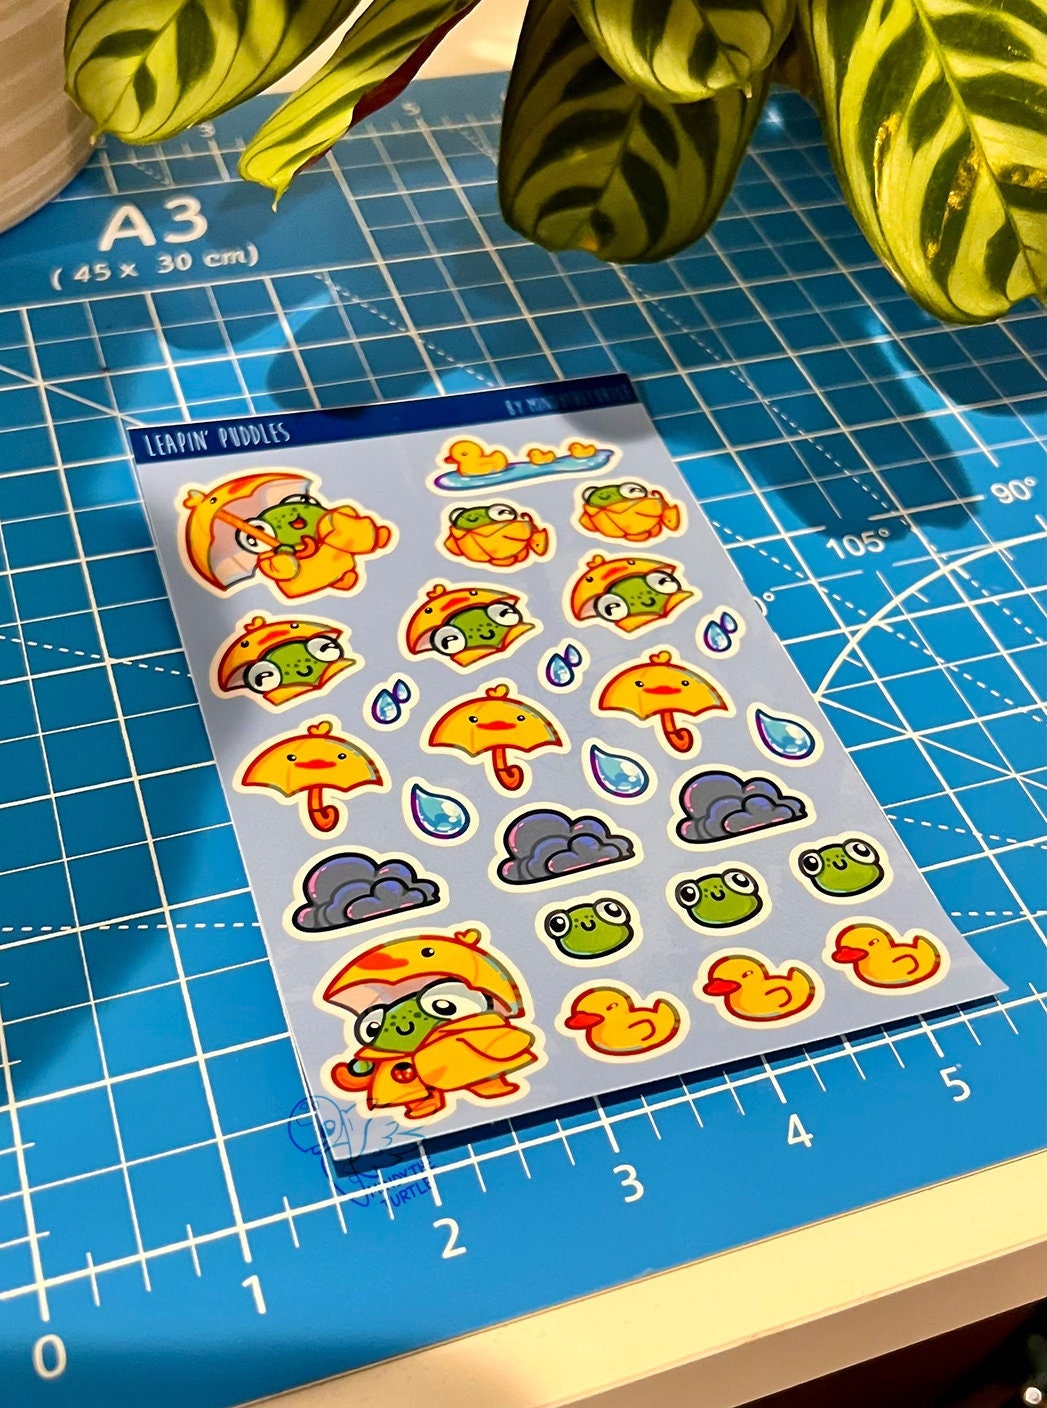 Kawaii Fall Season Sticker Sheet / Coffee Pumpkin Maple Leaf Stickers /  Cute Stickers for Journaling Notes Cards